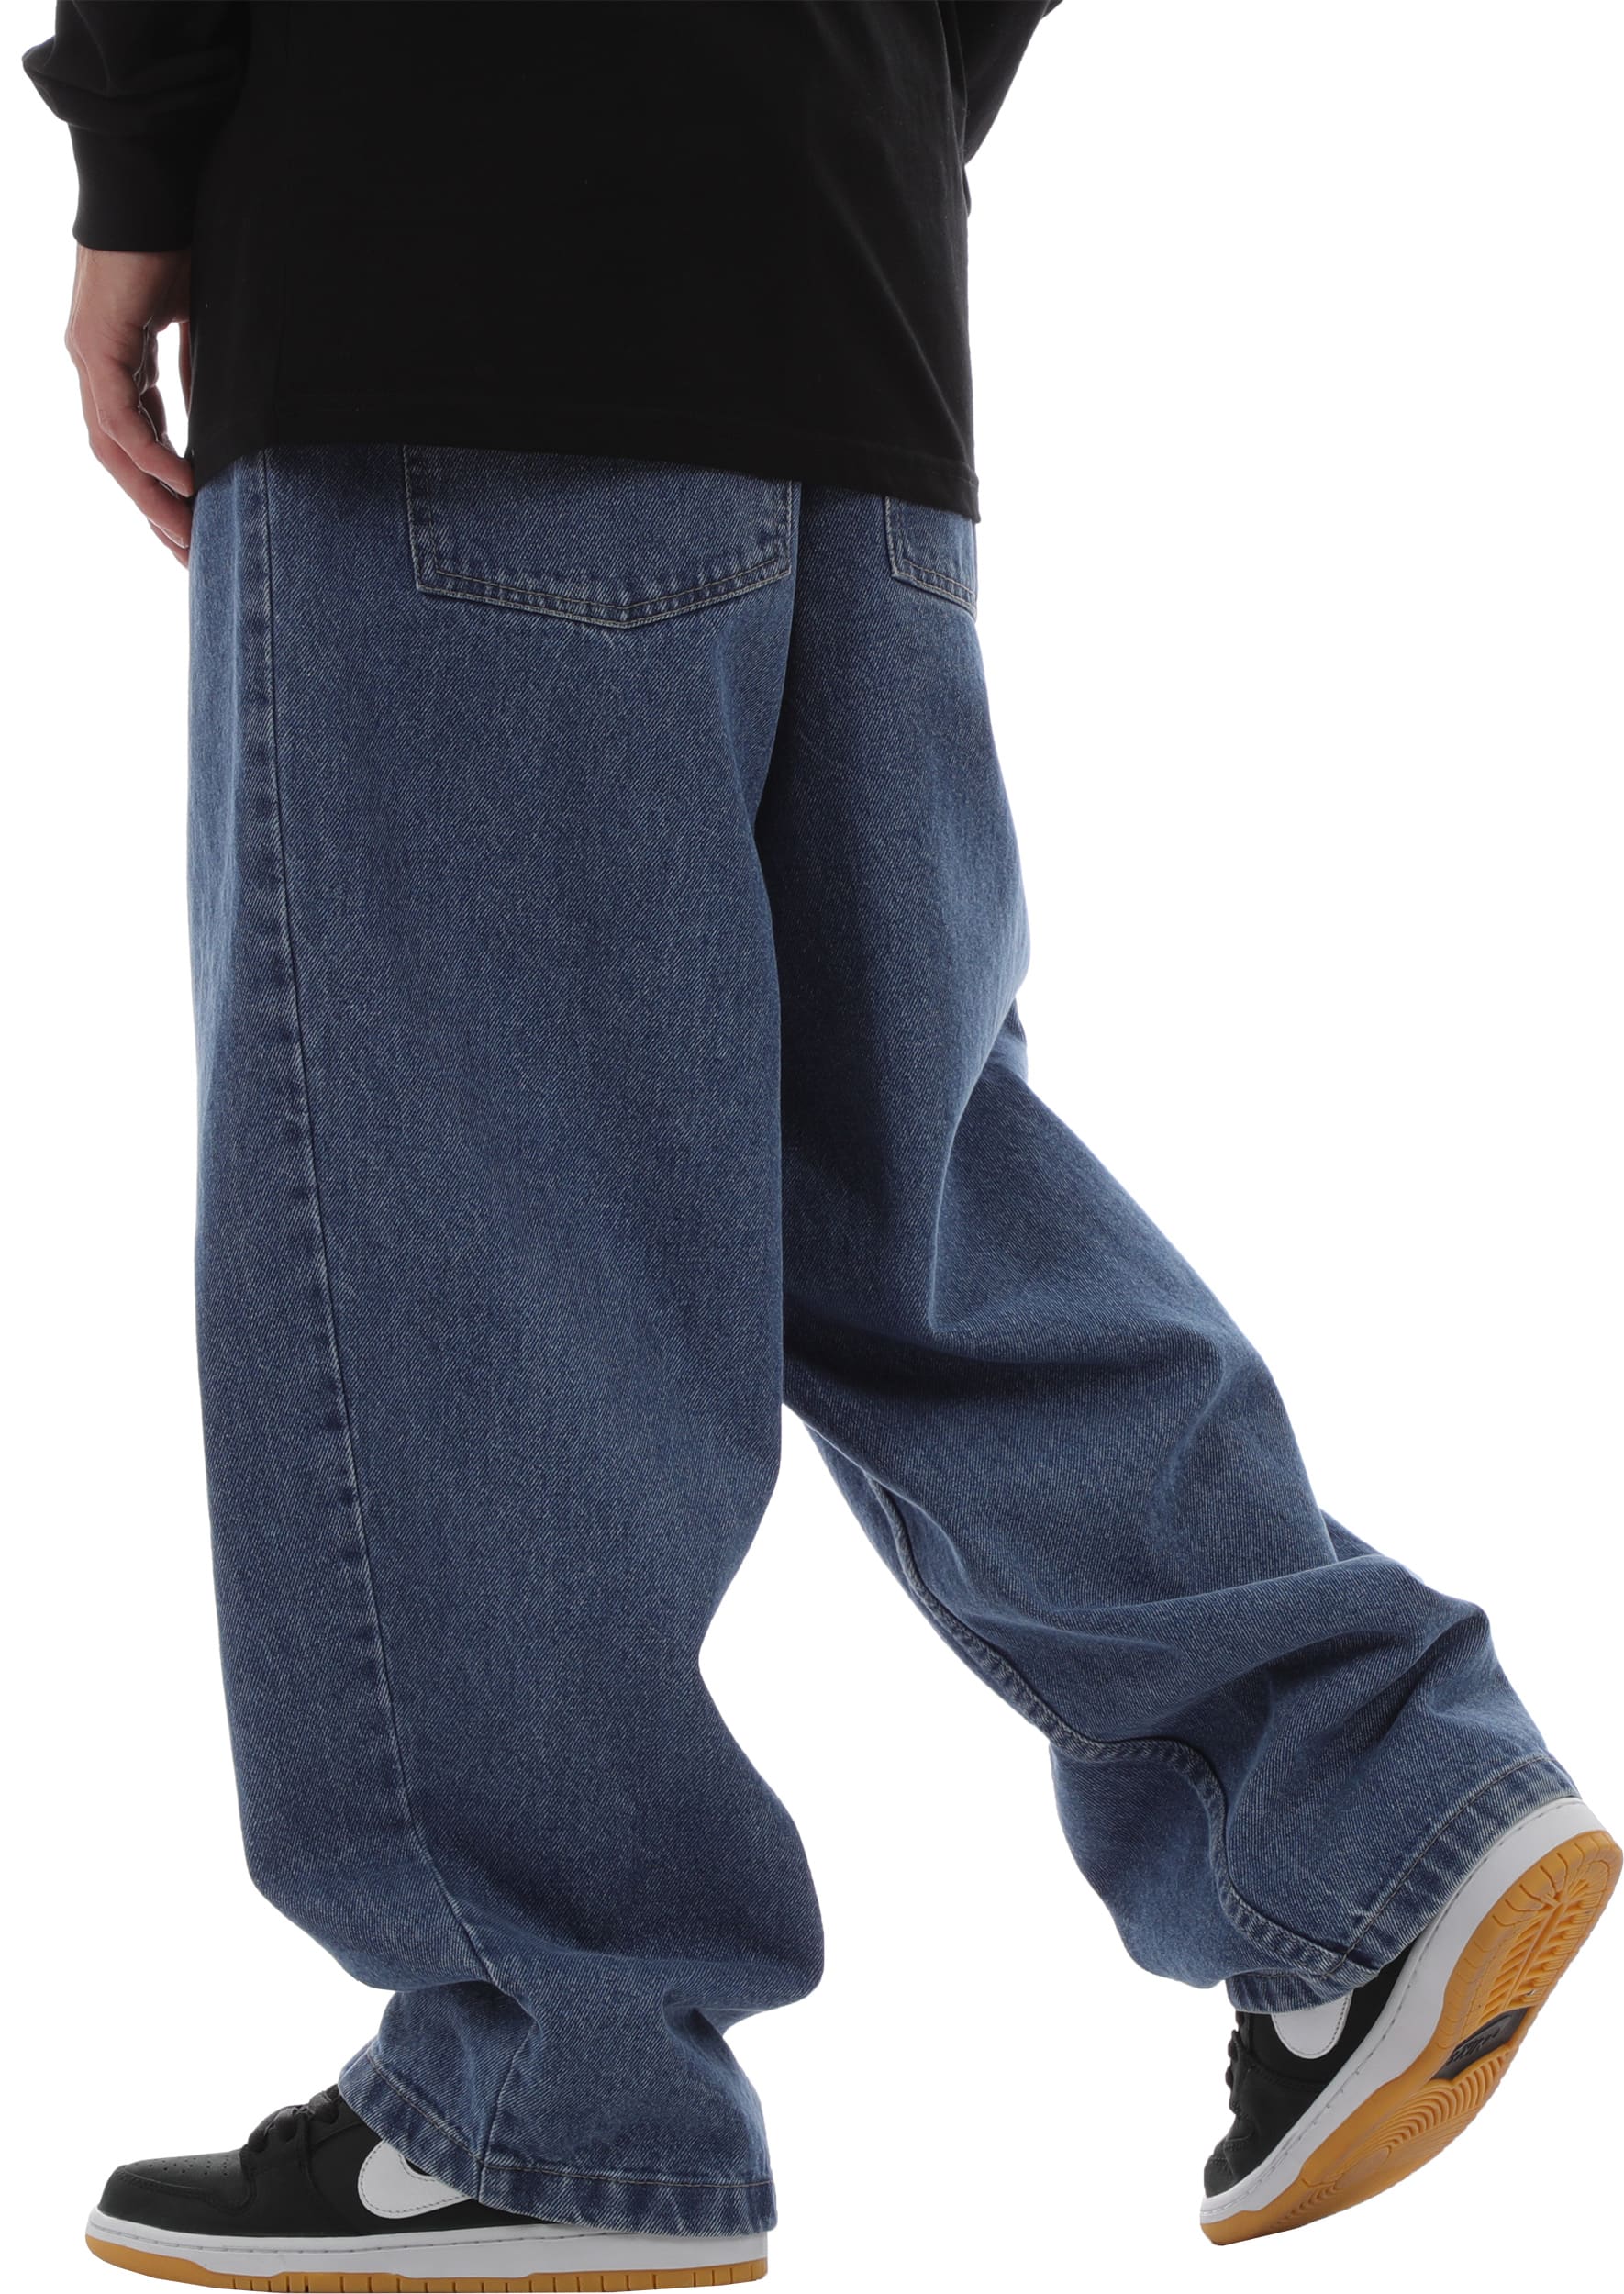 Polar Skate Co. Big Boy Jeans - mid blue | Tactics